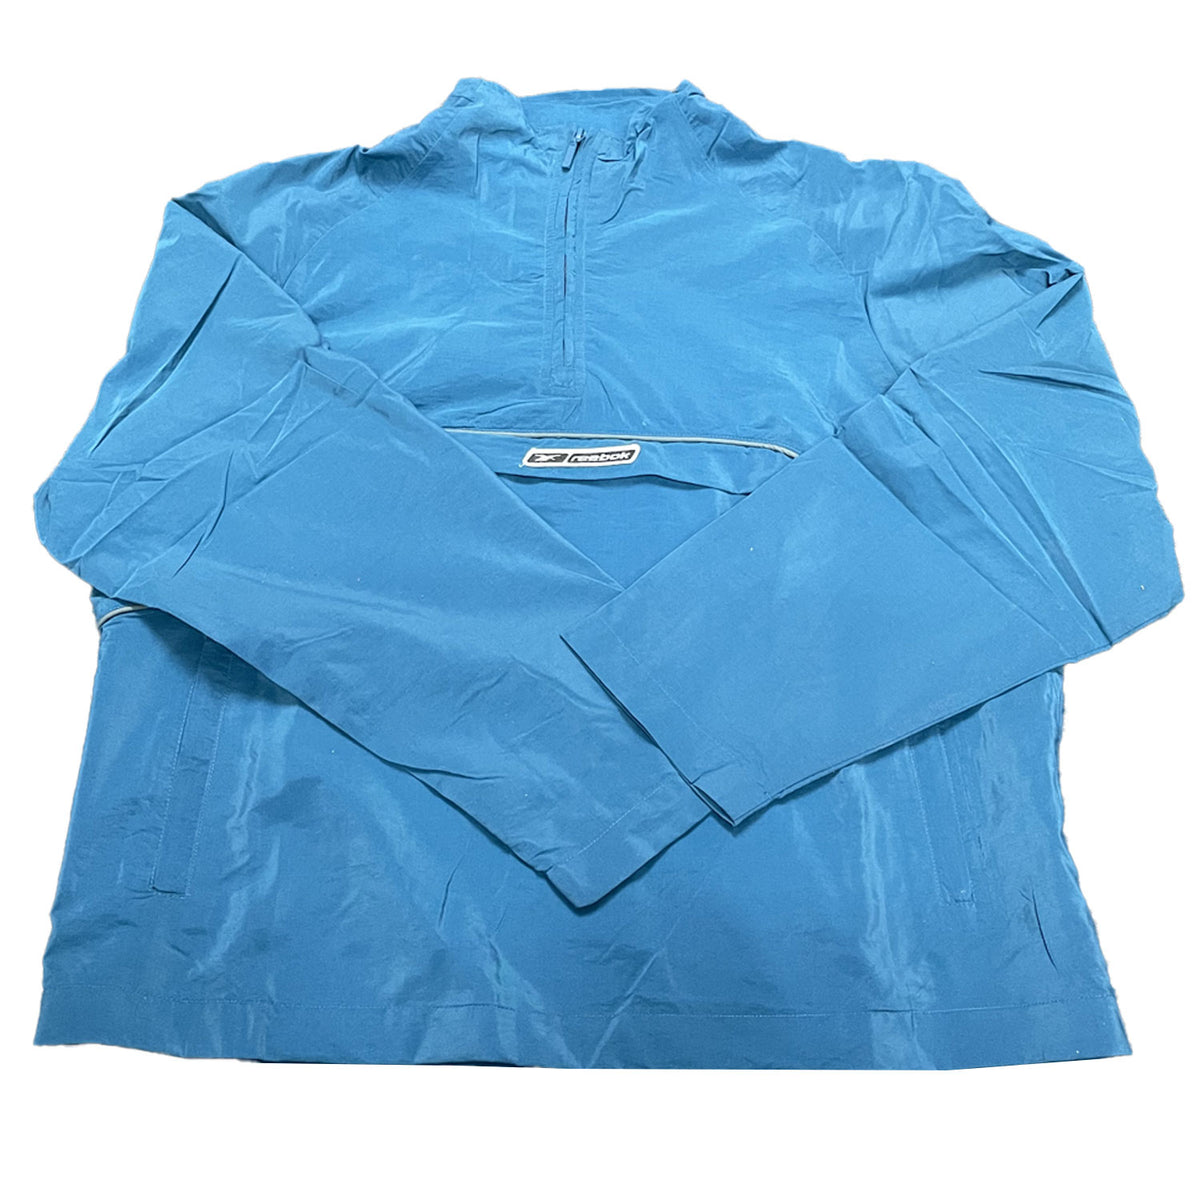 Reebok Women Athletics 1/4 Zip Track Jacket - Blue - UK Size 12